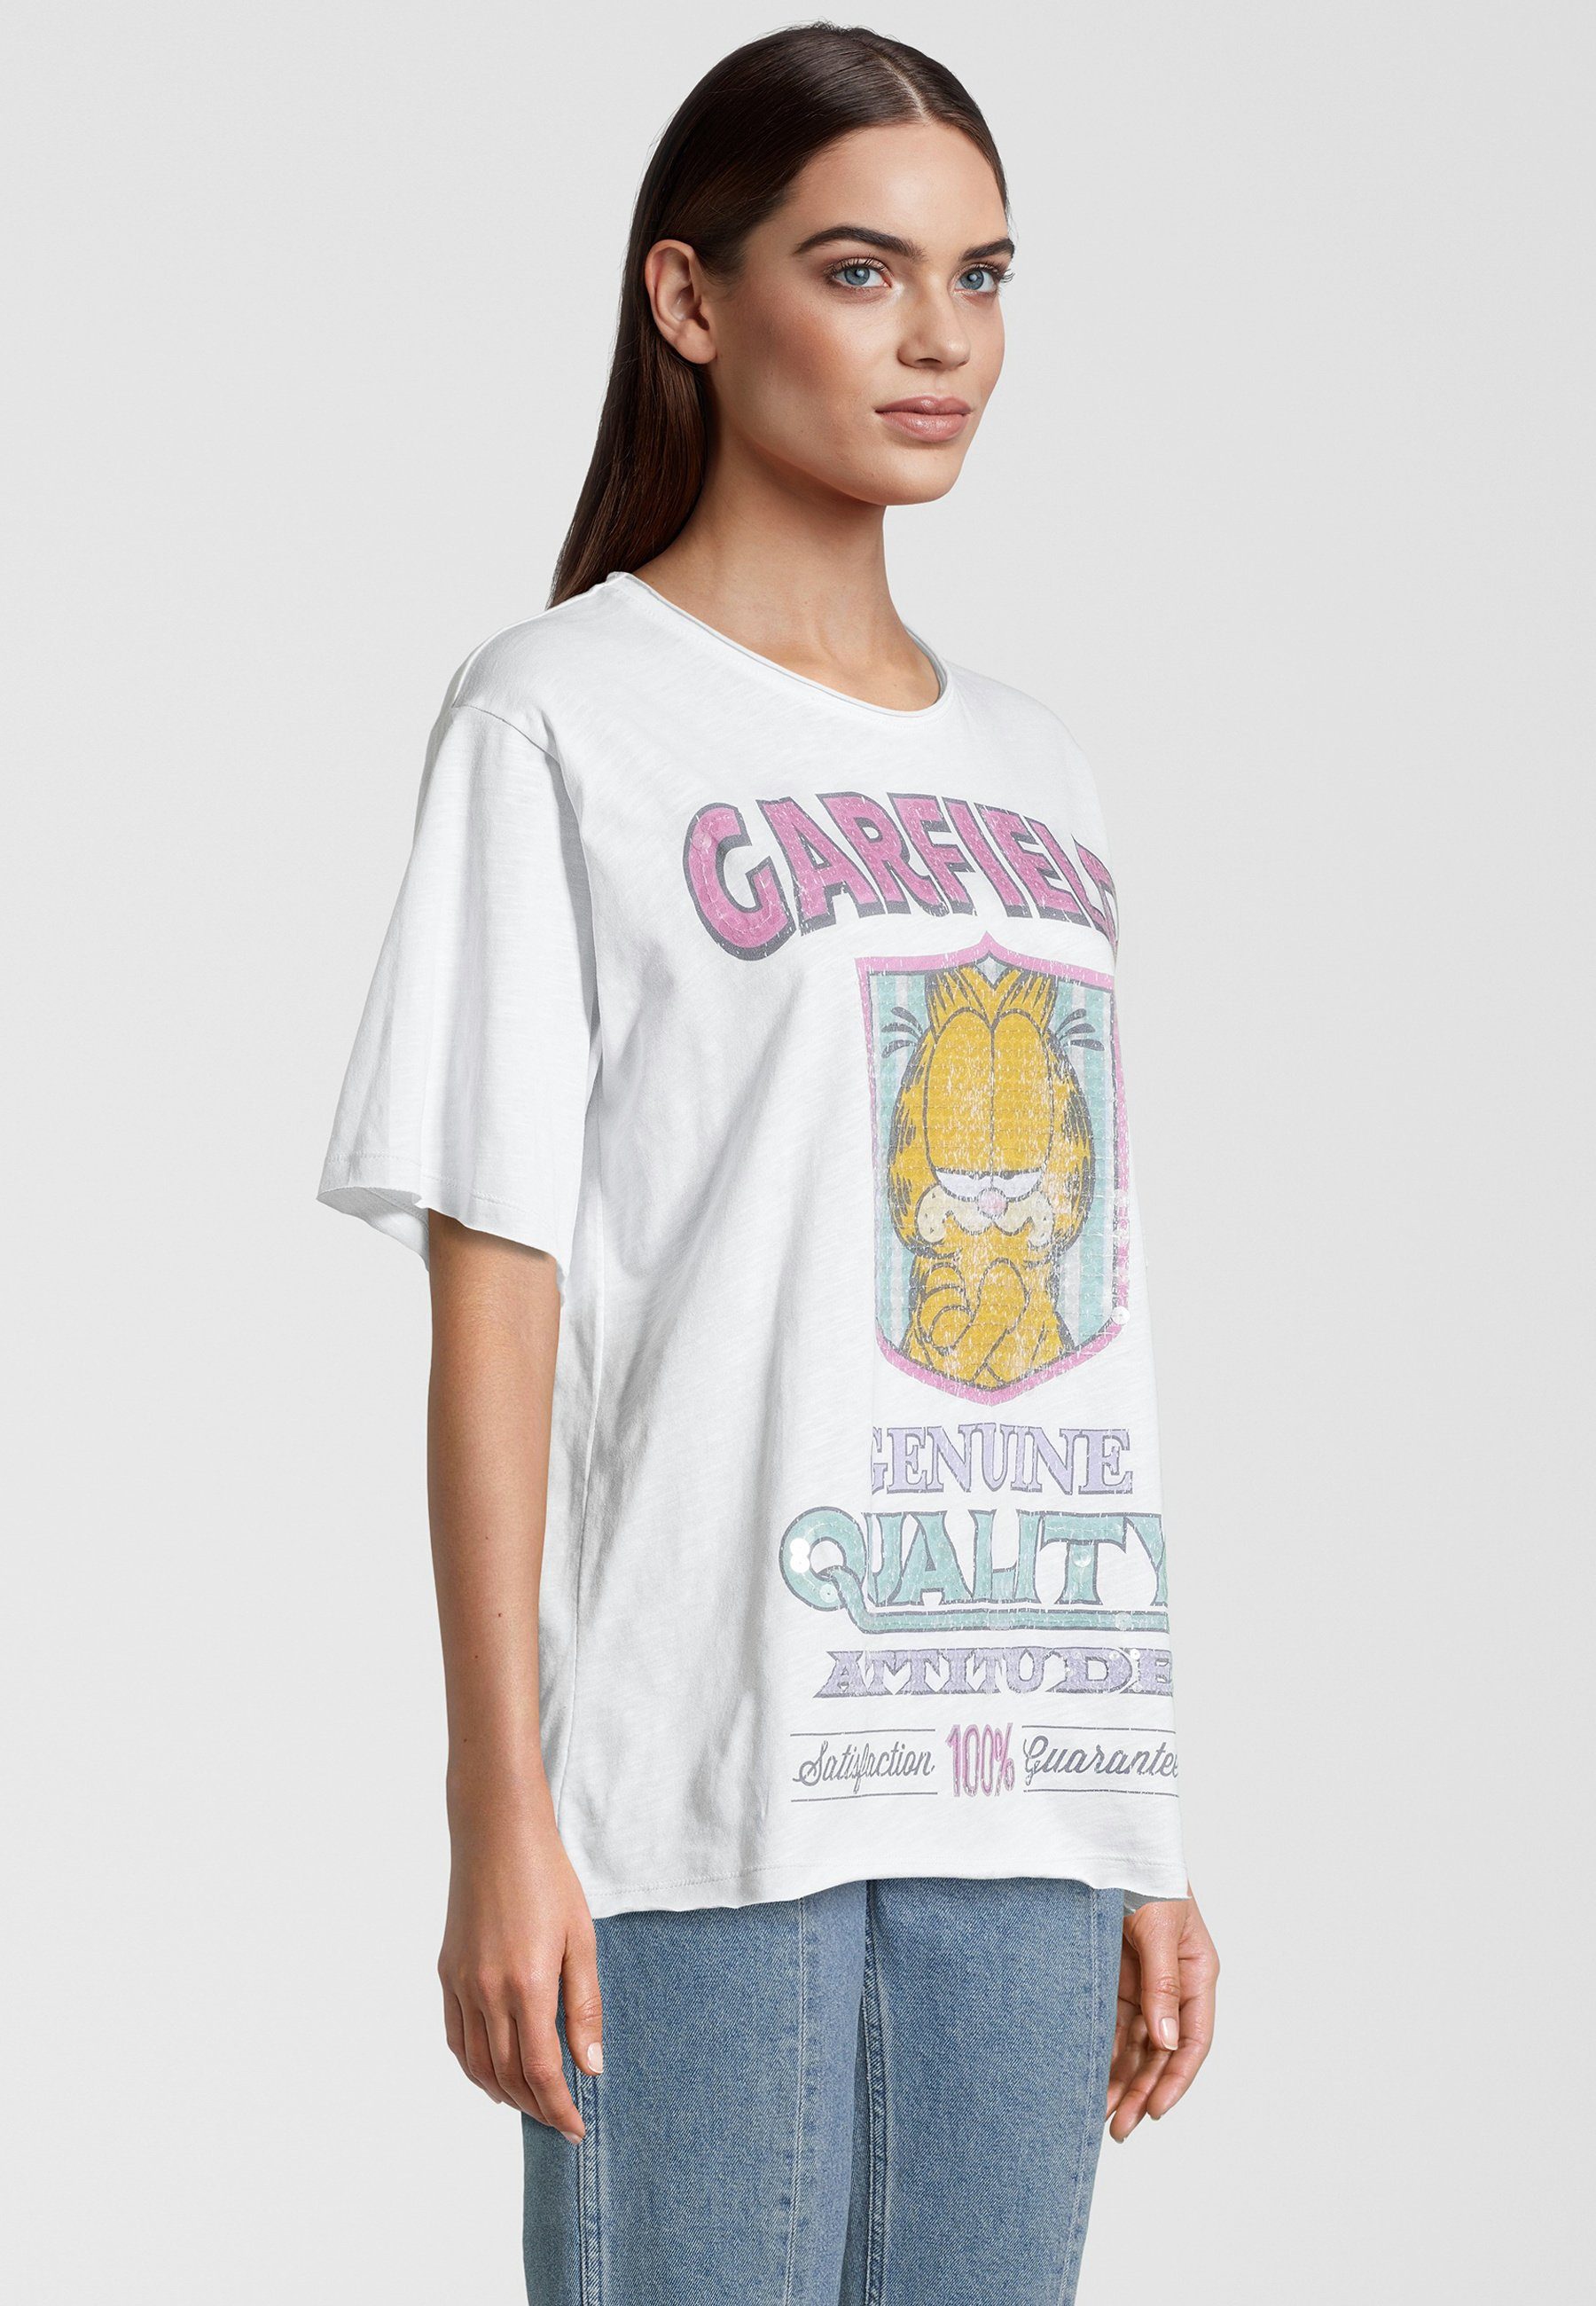 T-Shirt Frogbox modernem Design mit Garfield-Print T-Shirt mit